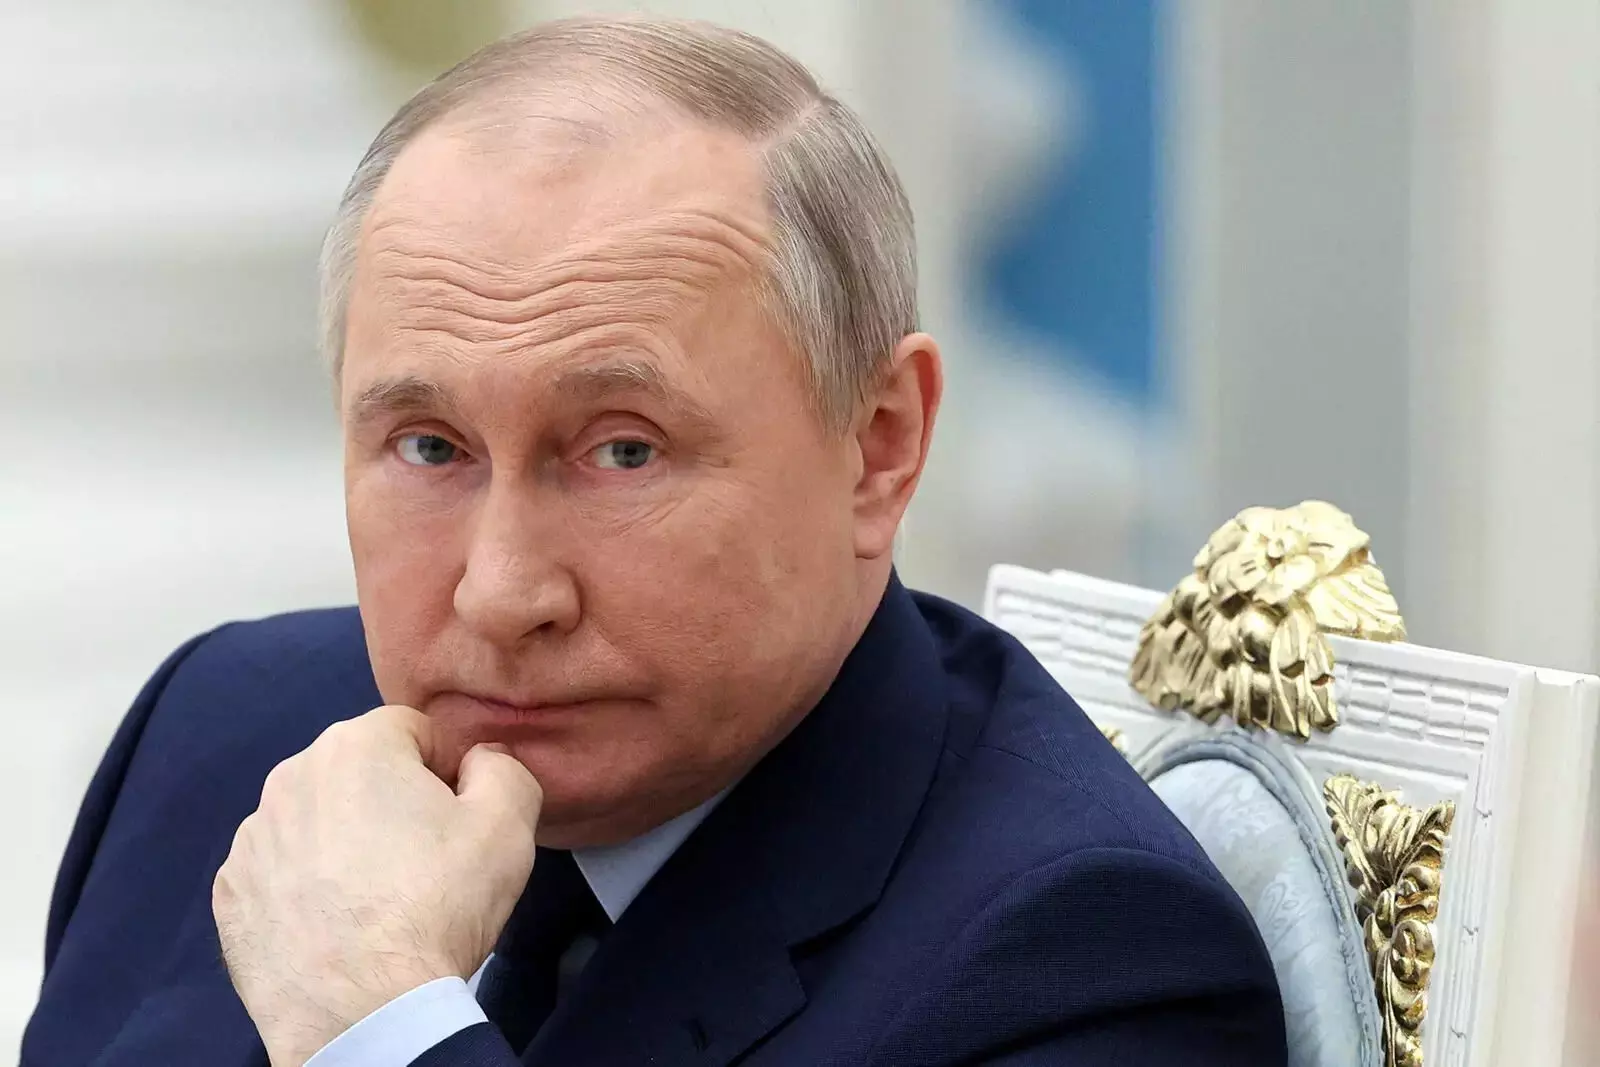 Vladimir Putin’s hold on power weakening, many Russians believe: report